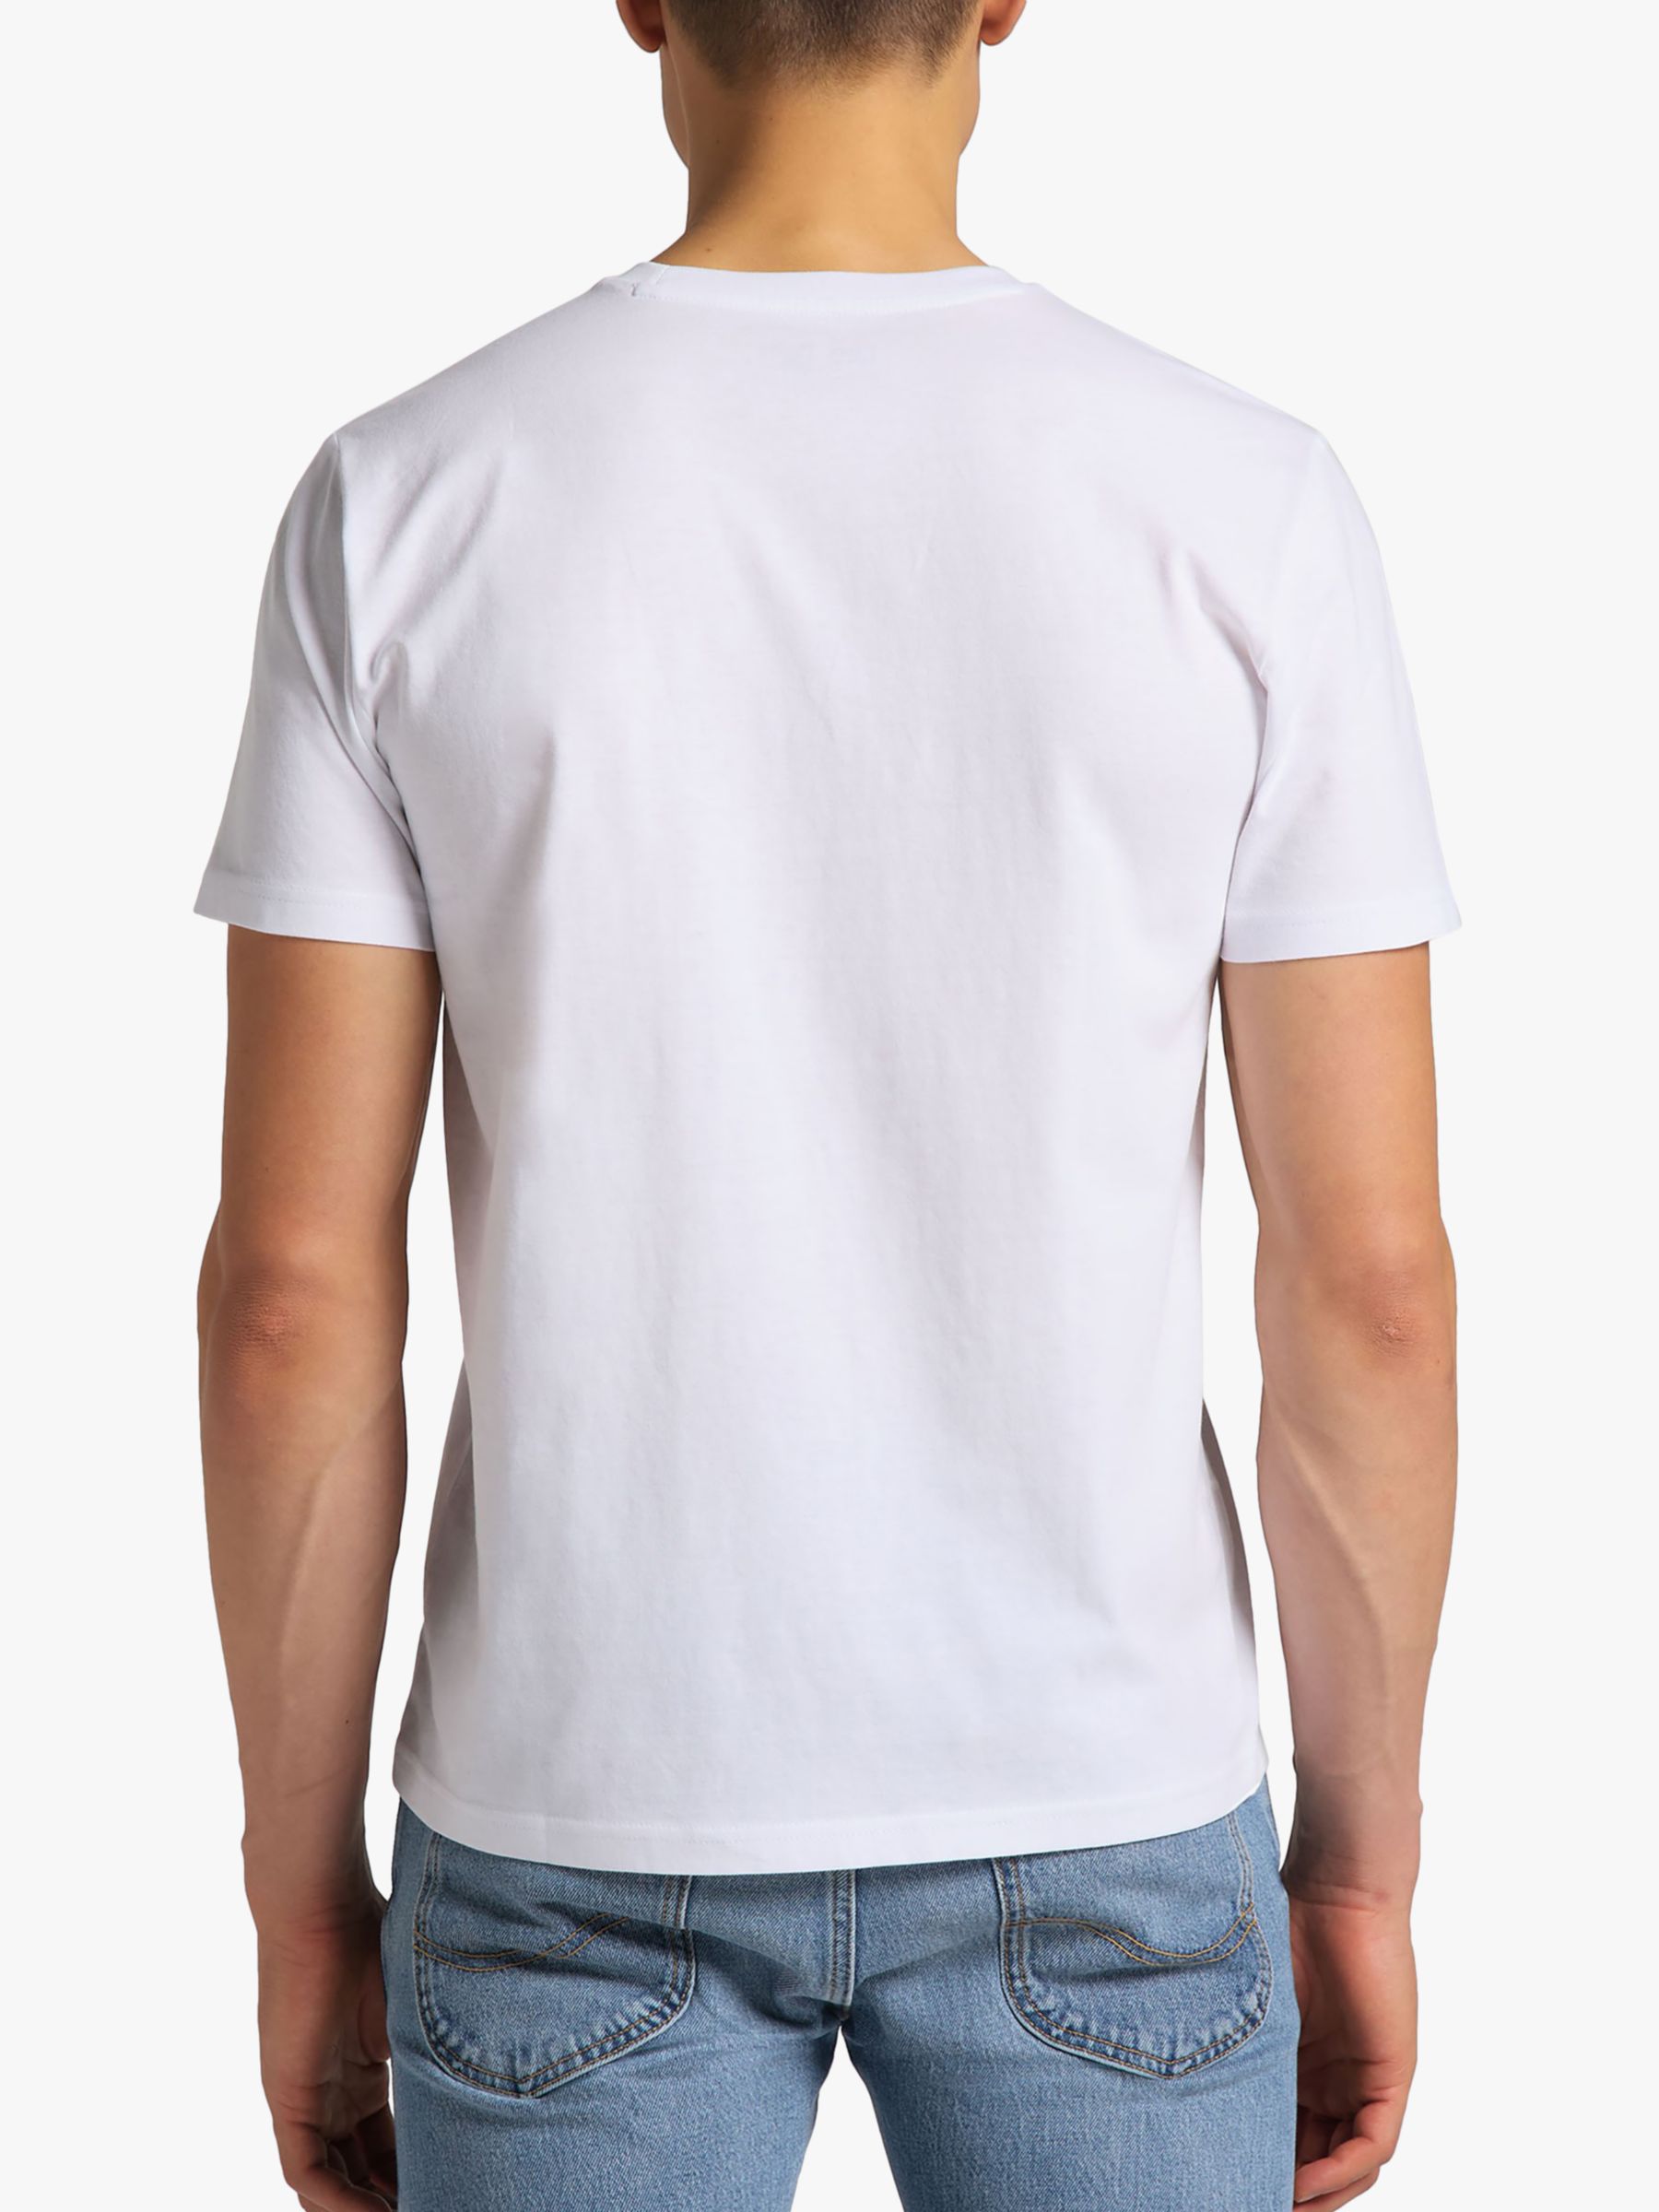 Lee Regular Fit Cotton Logo T-Shirt, White, S